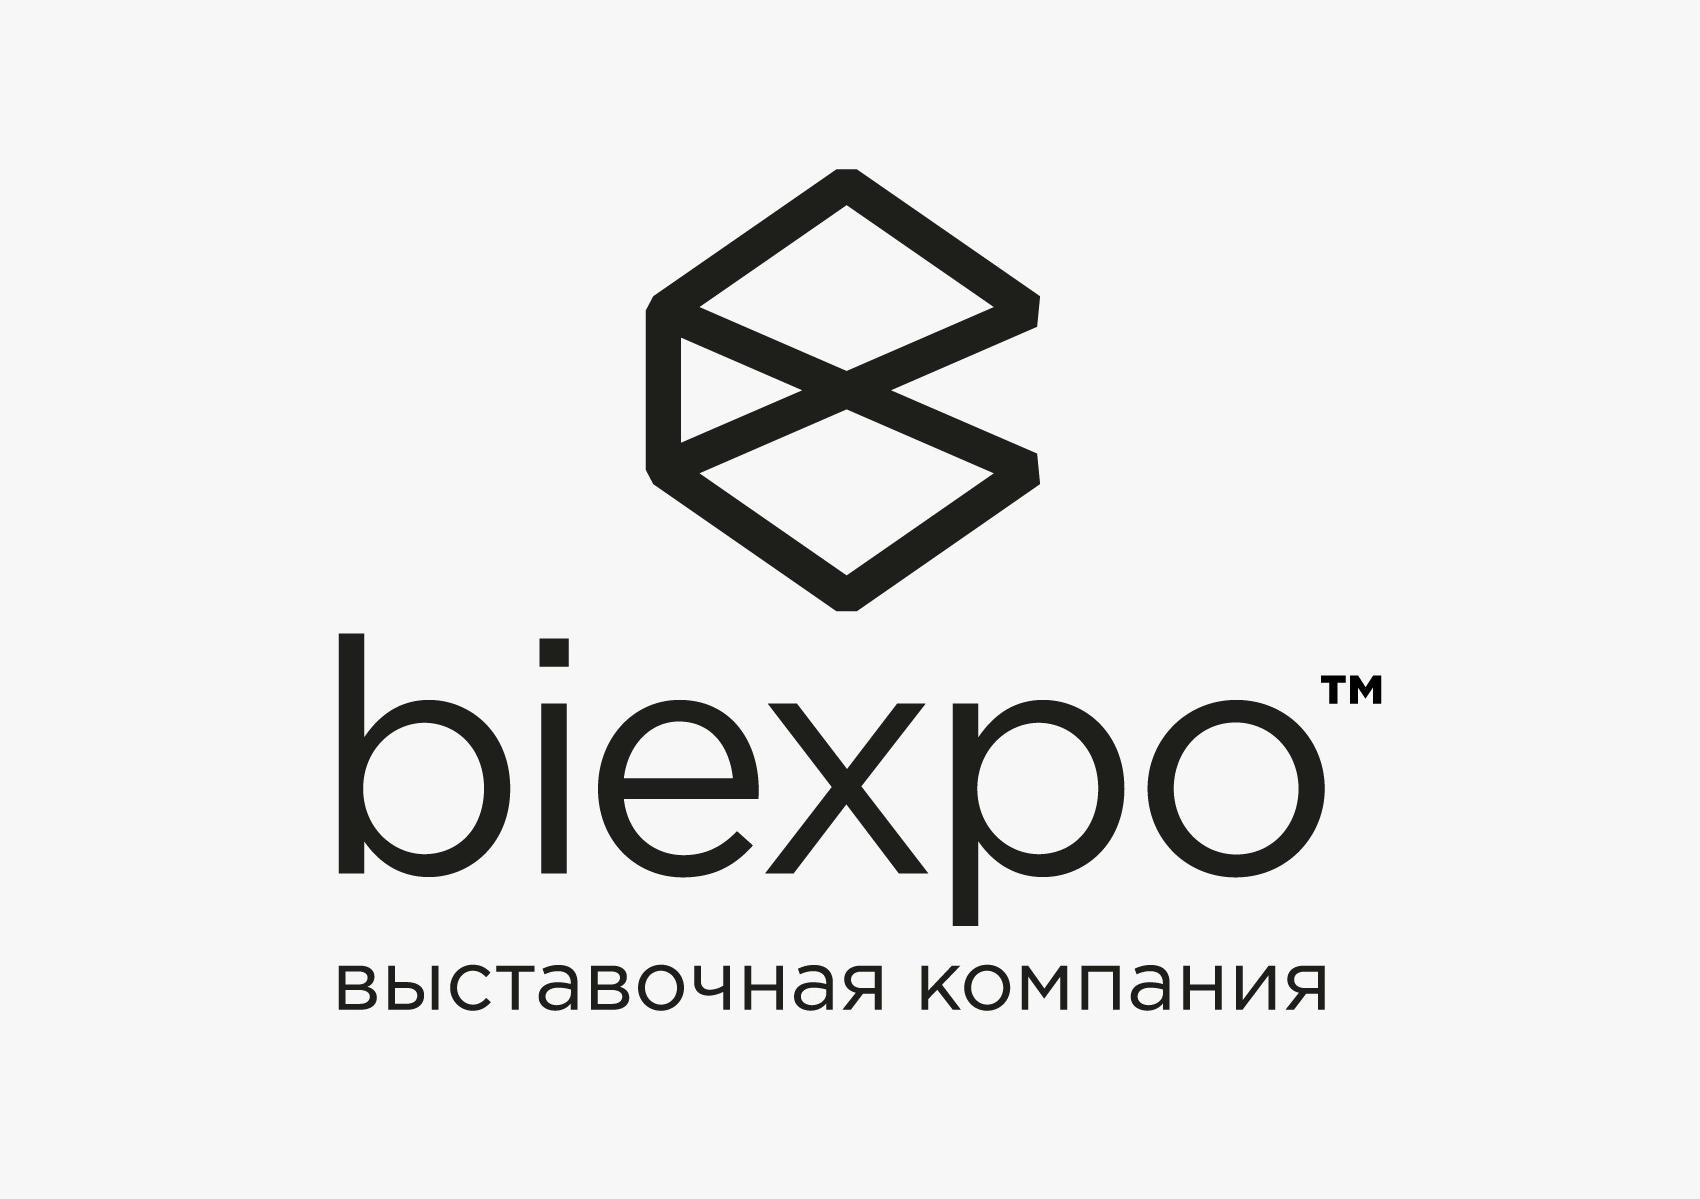 biexpo